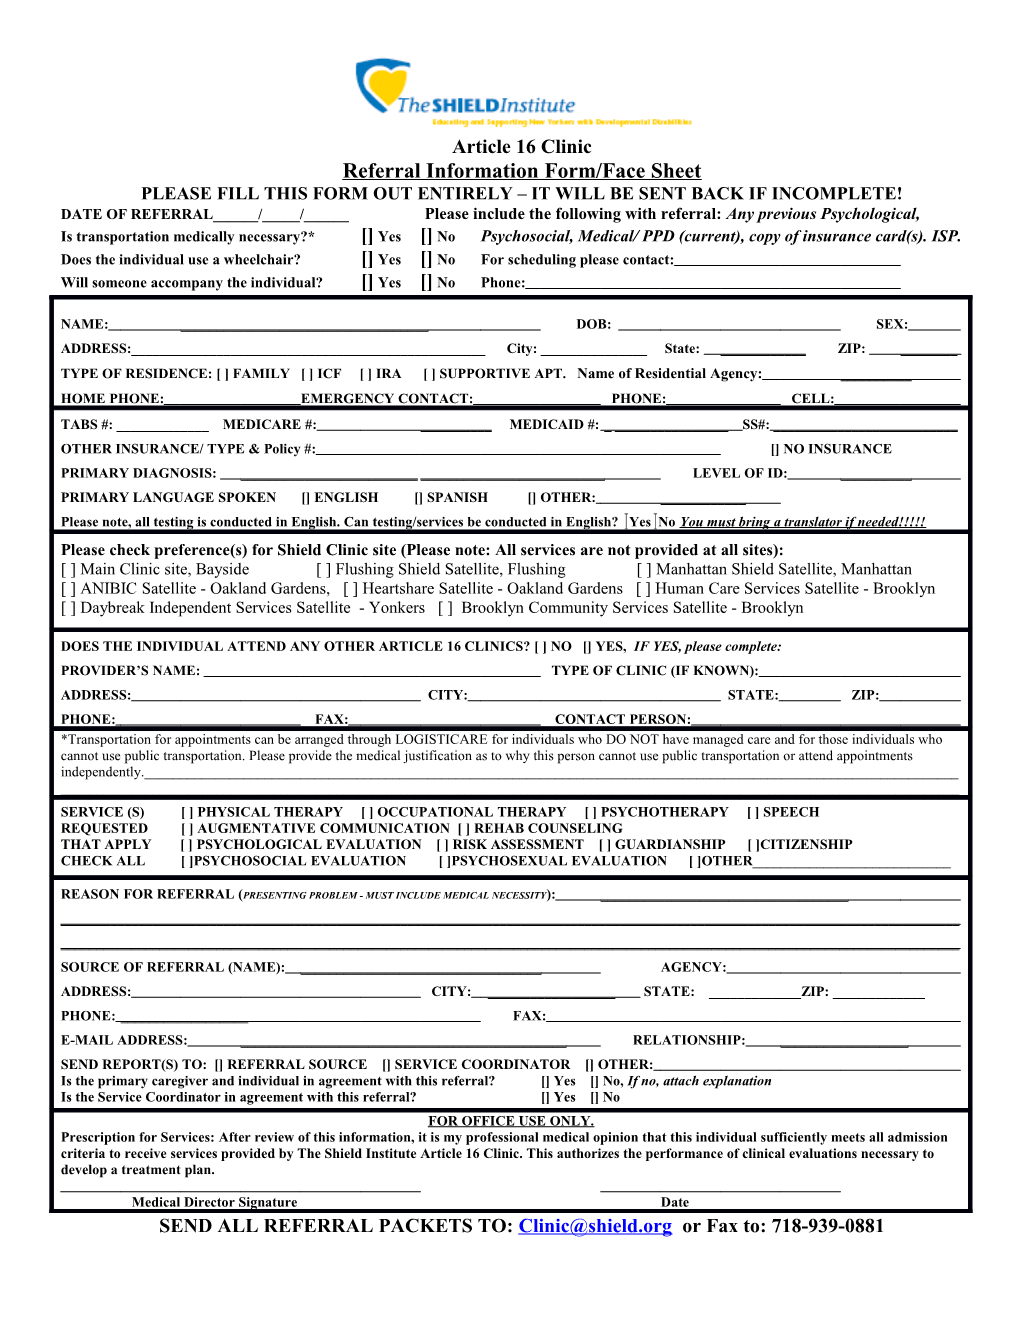 Referral Information Form/Face Sheet